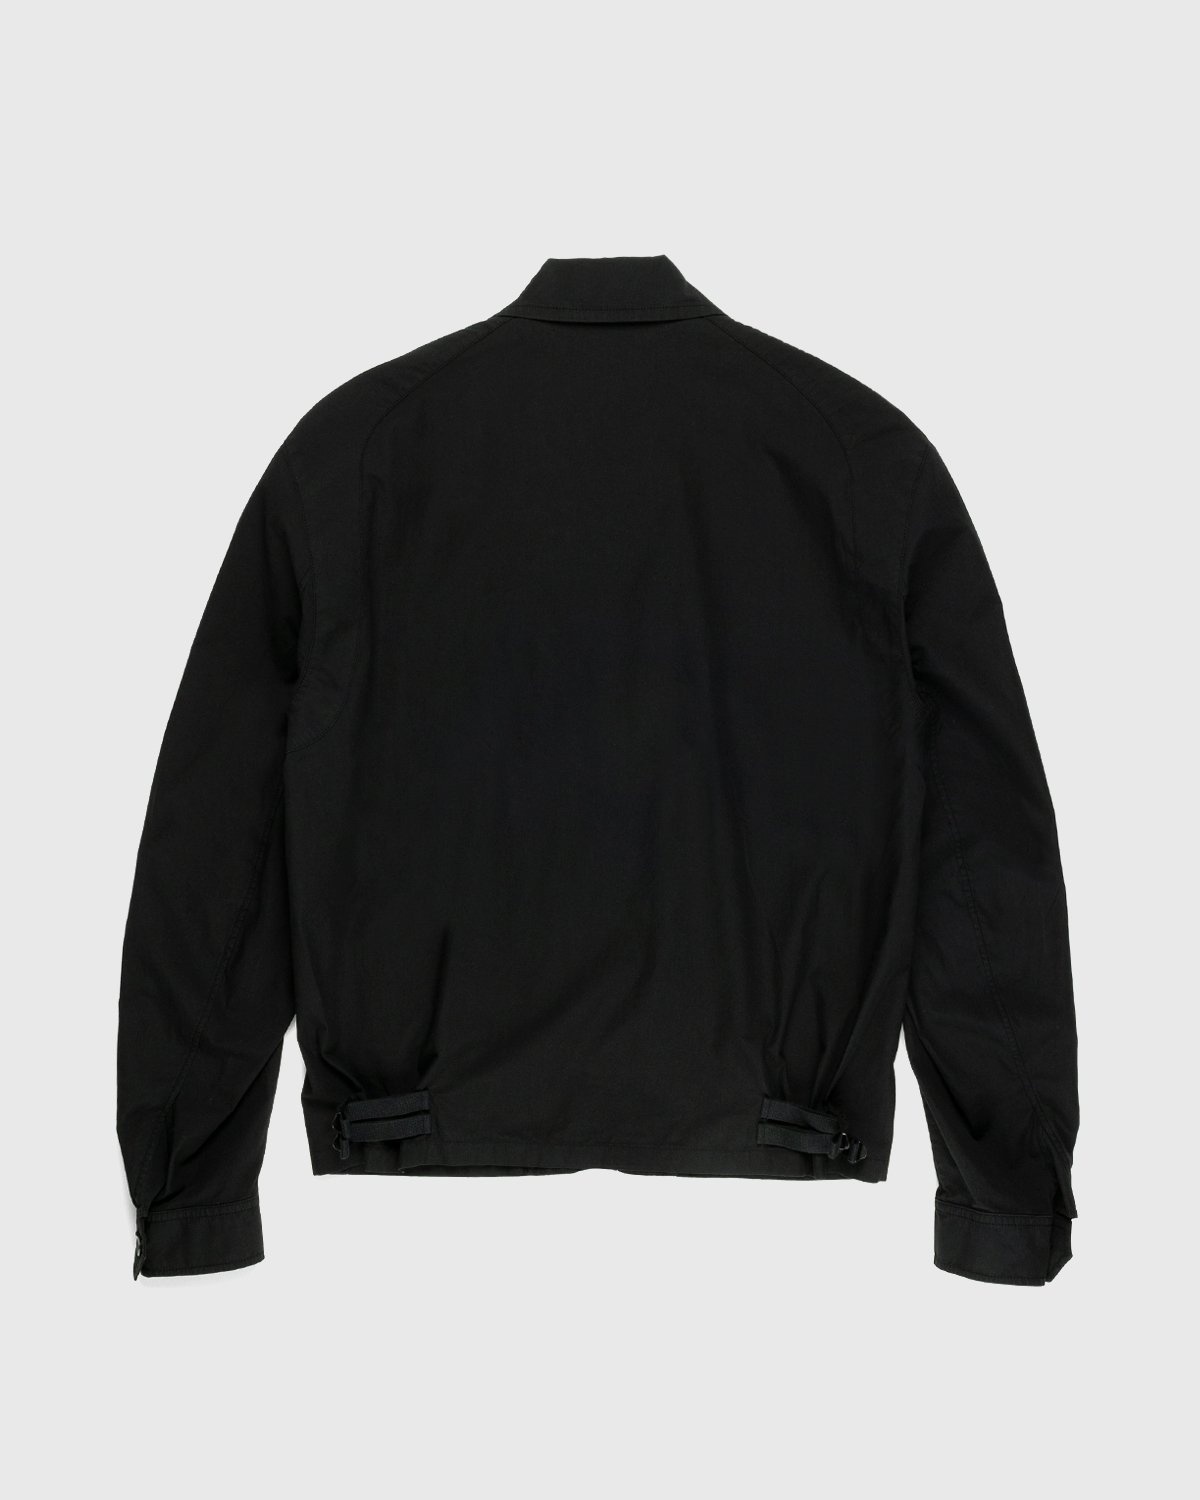 Lemaire – Shirt Blouson Black - Longsleeve Shirts - Black - Image 2